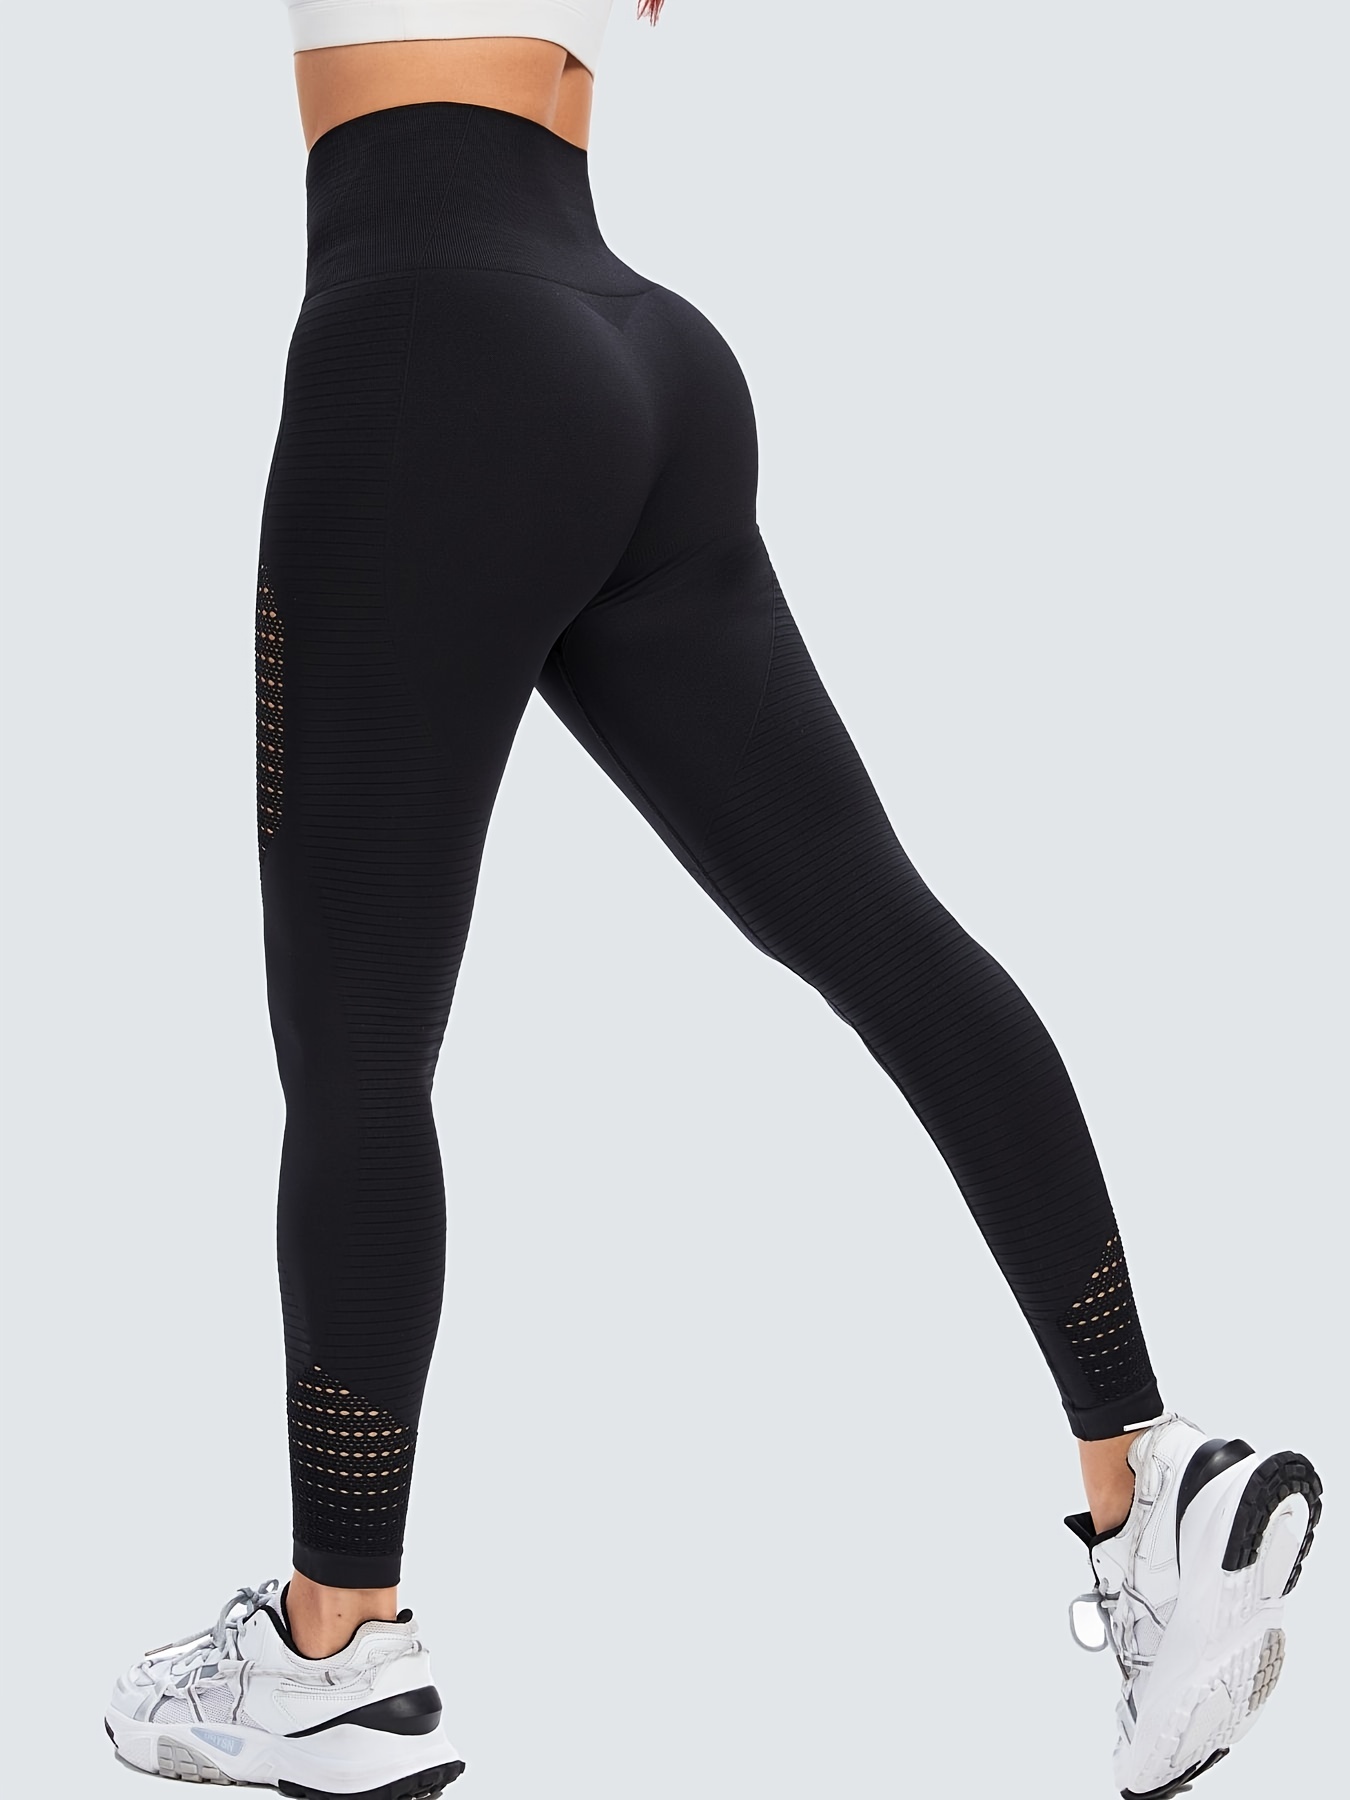 Gymshark Legginshigh Waist Yoga Pants For Women - Seamless Tummy Control  Workout Leggings